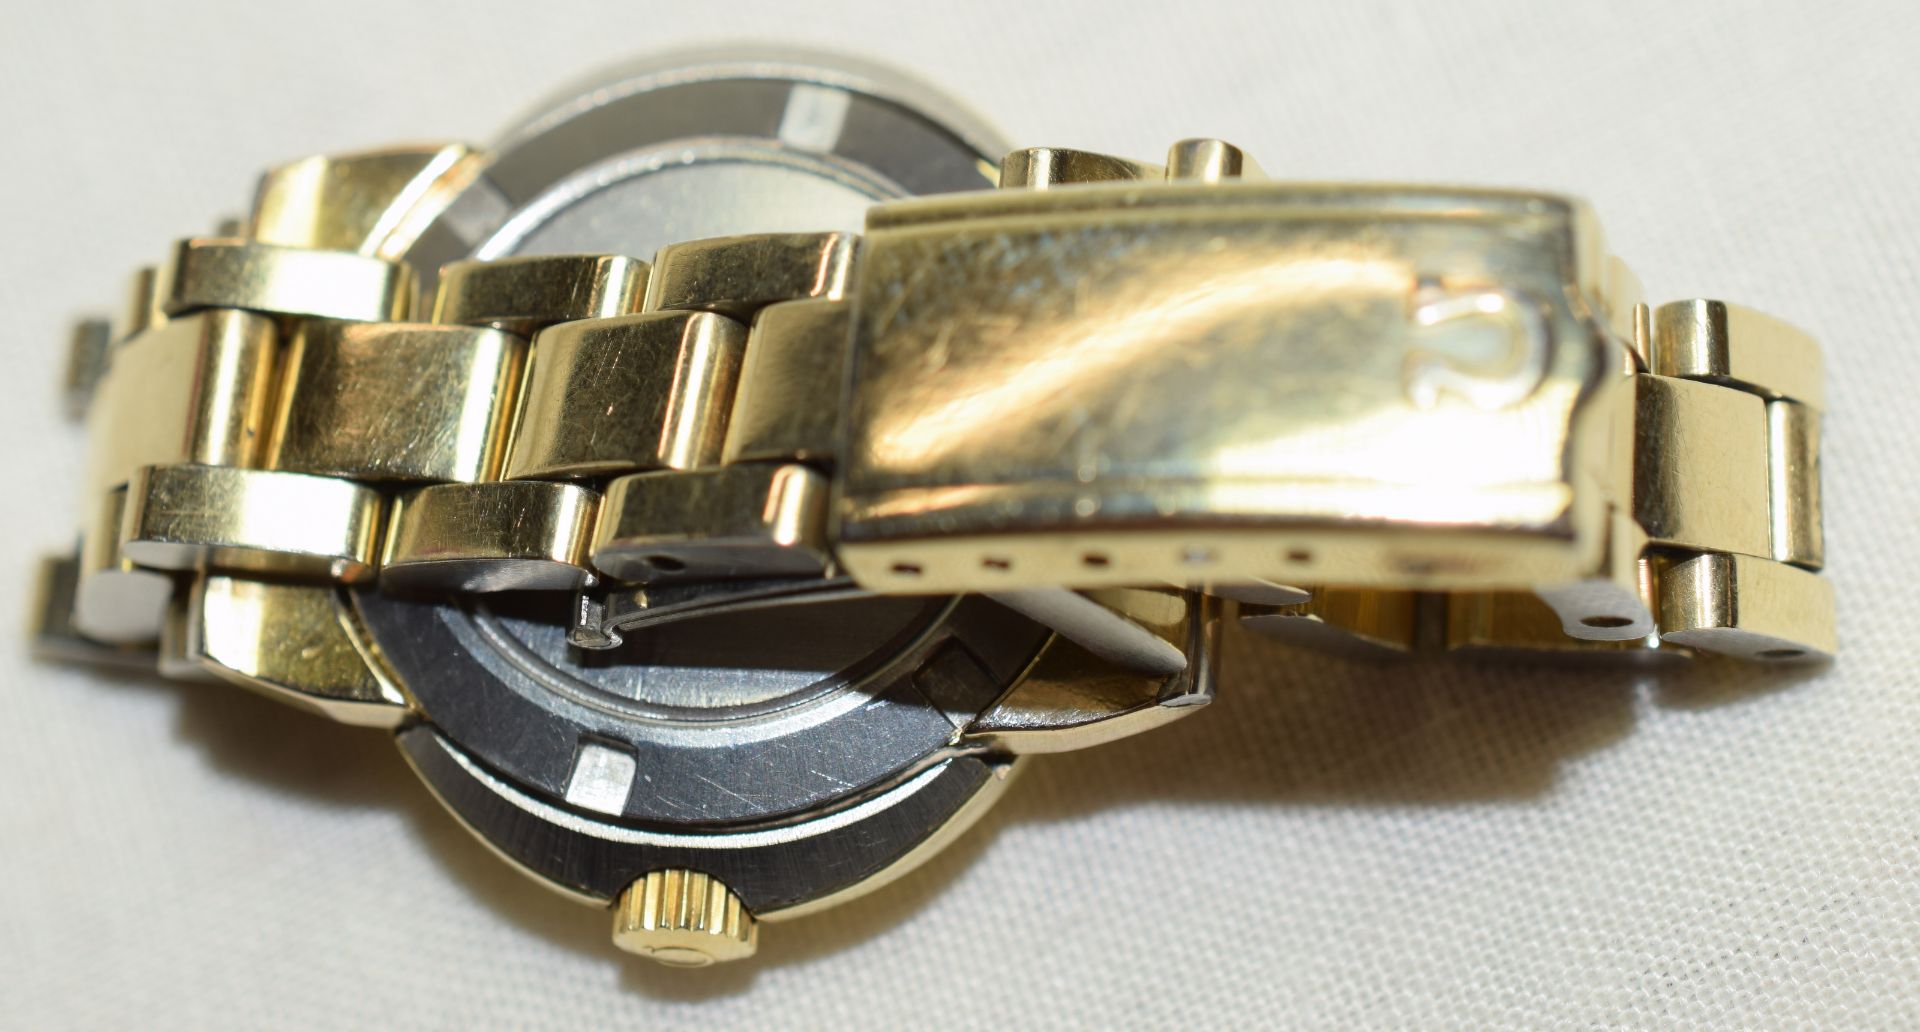 Omega Dynamic Lady's Automatic Watch On Bracelet - Image 6 of 6